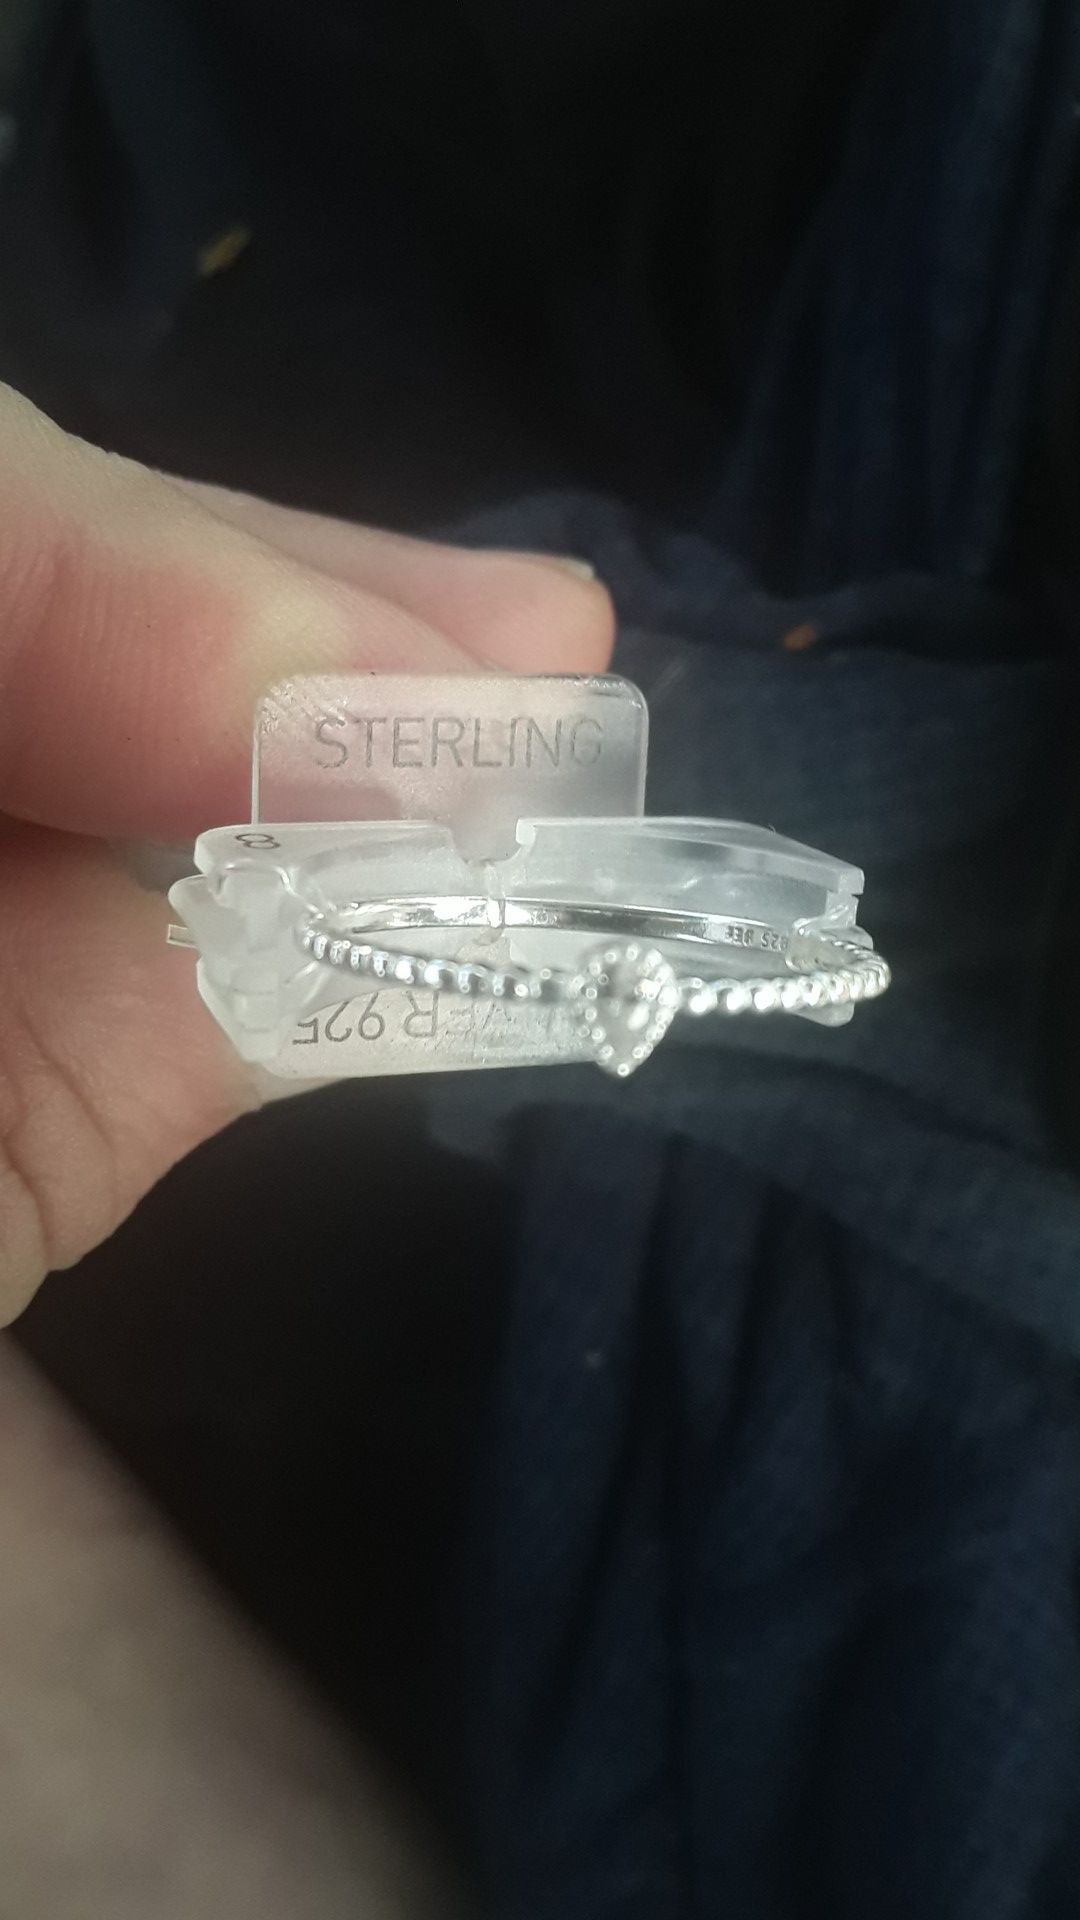 stetling silver ring